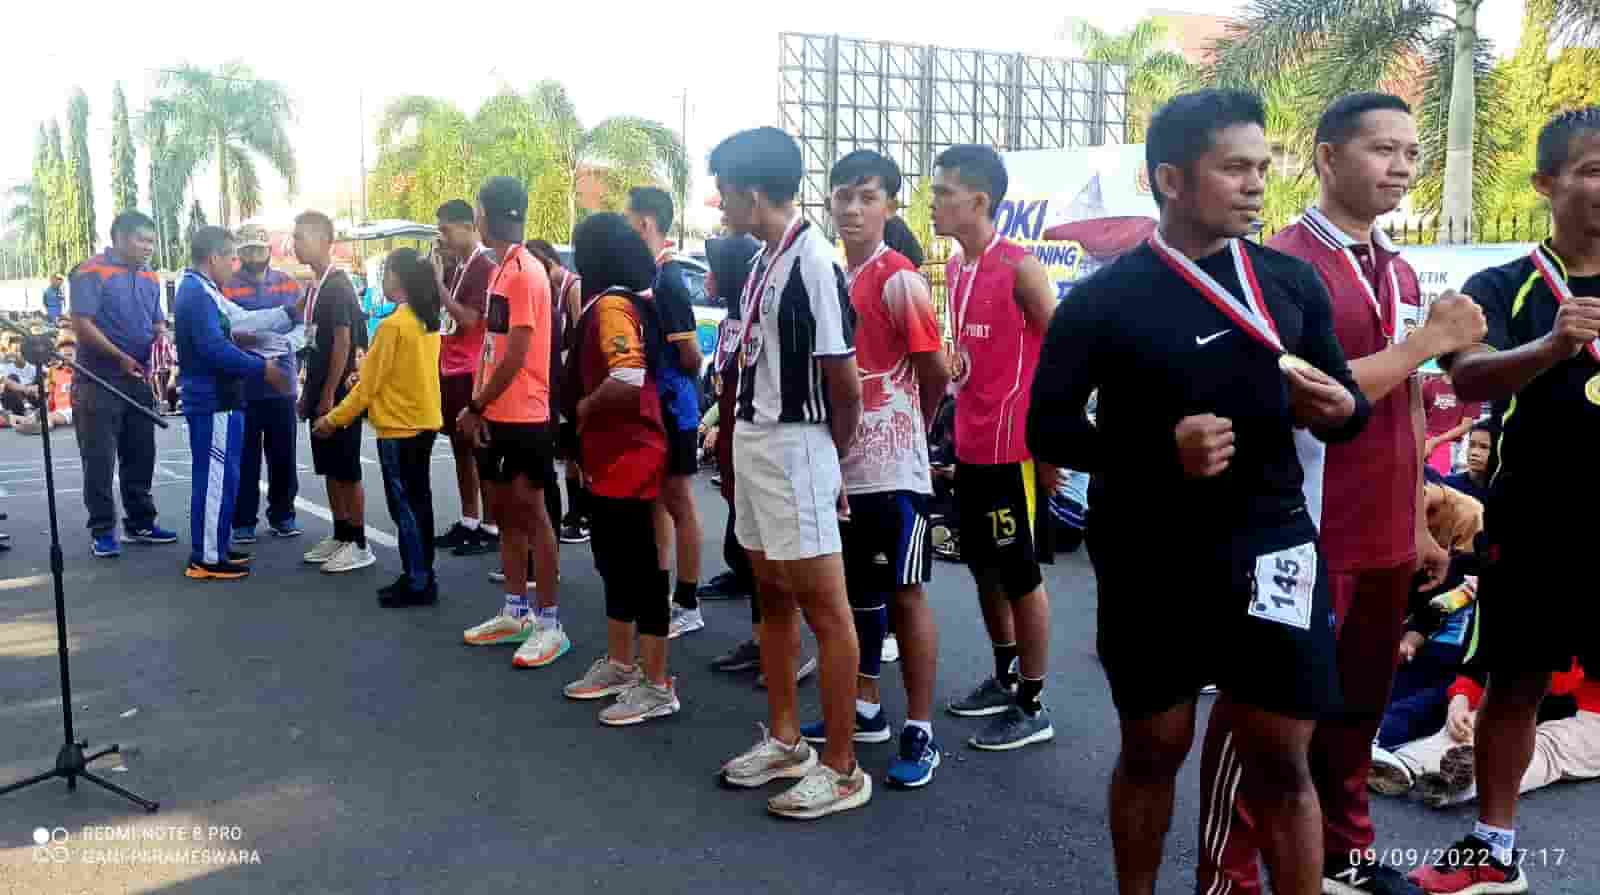 Haornas, Ratusan Runners Ikuti Lomba Lari Jelajah Alam 5K